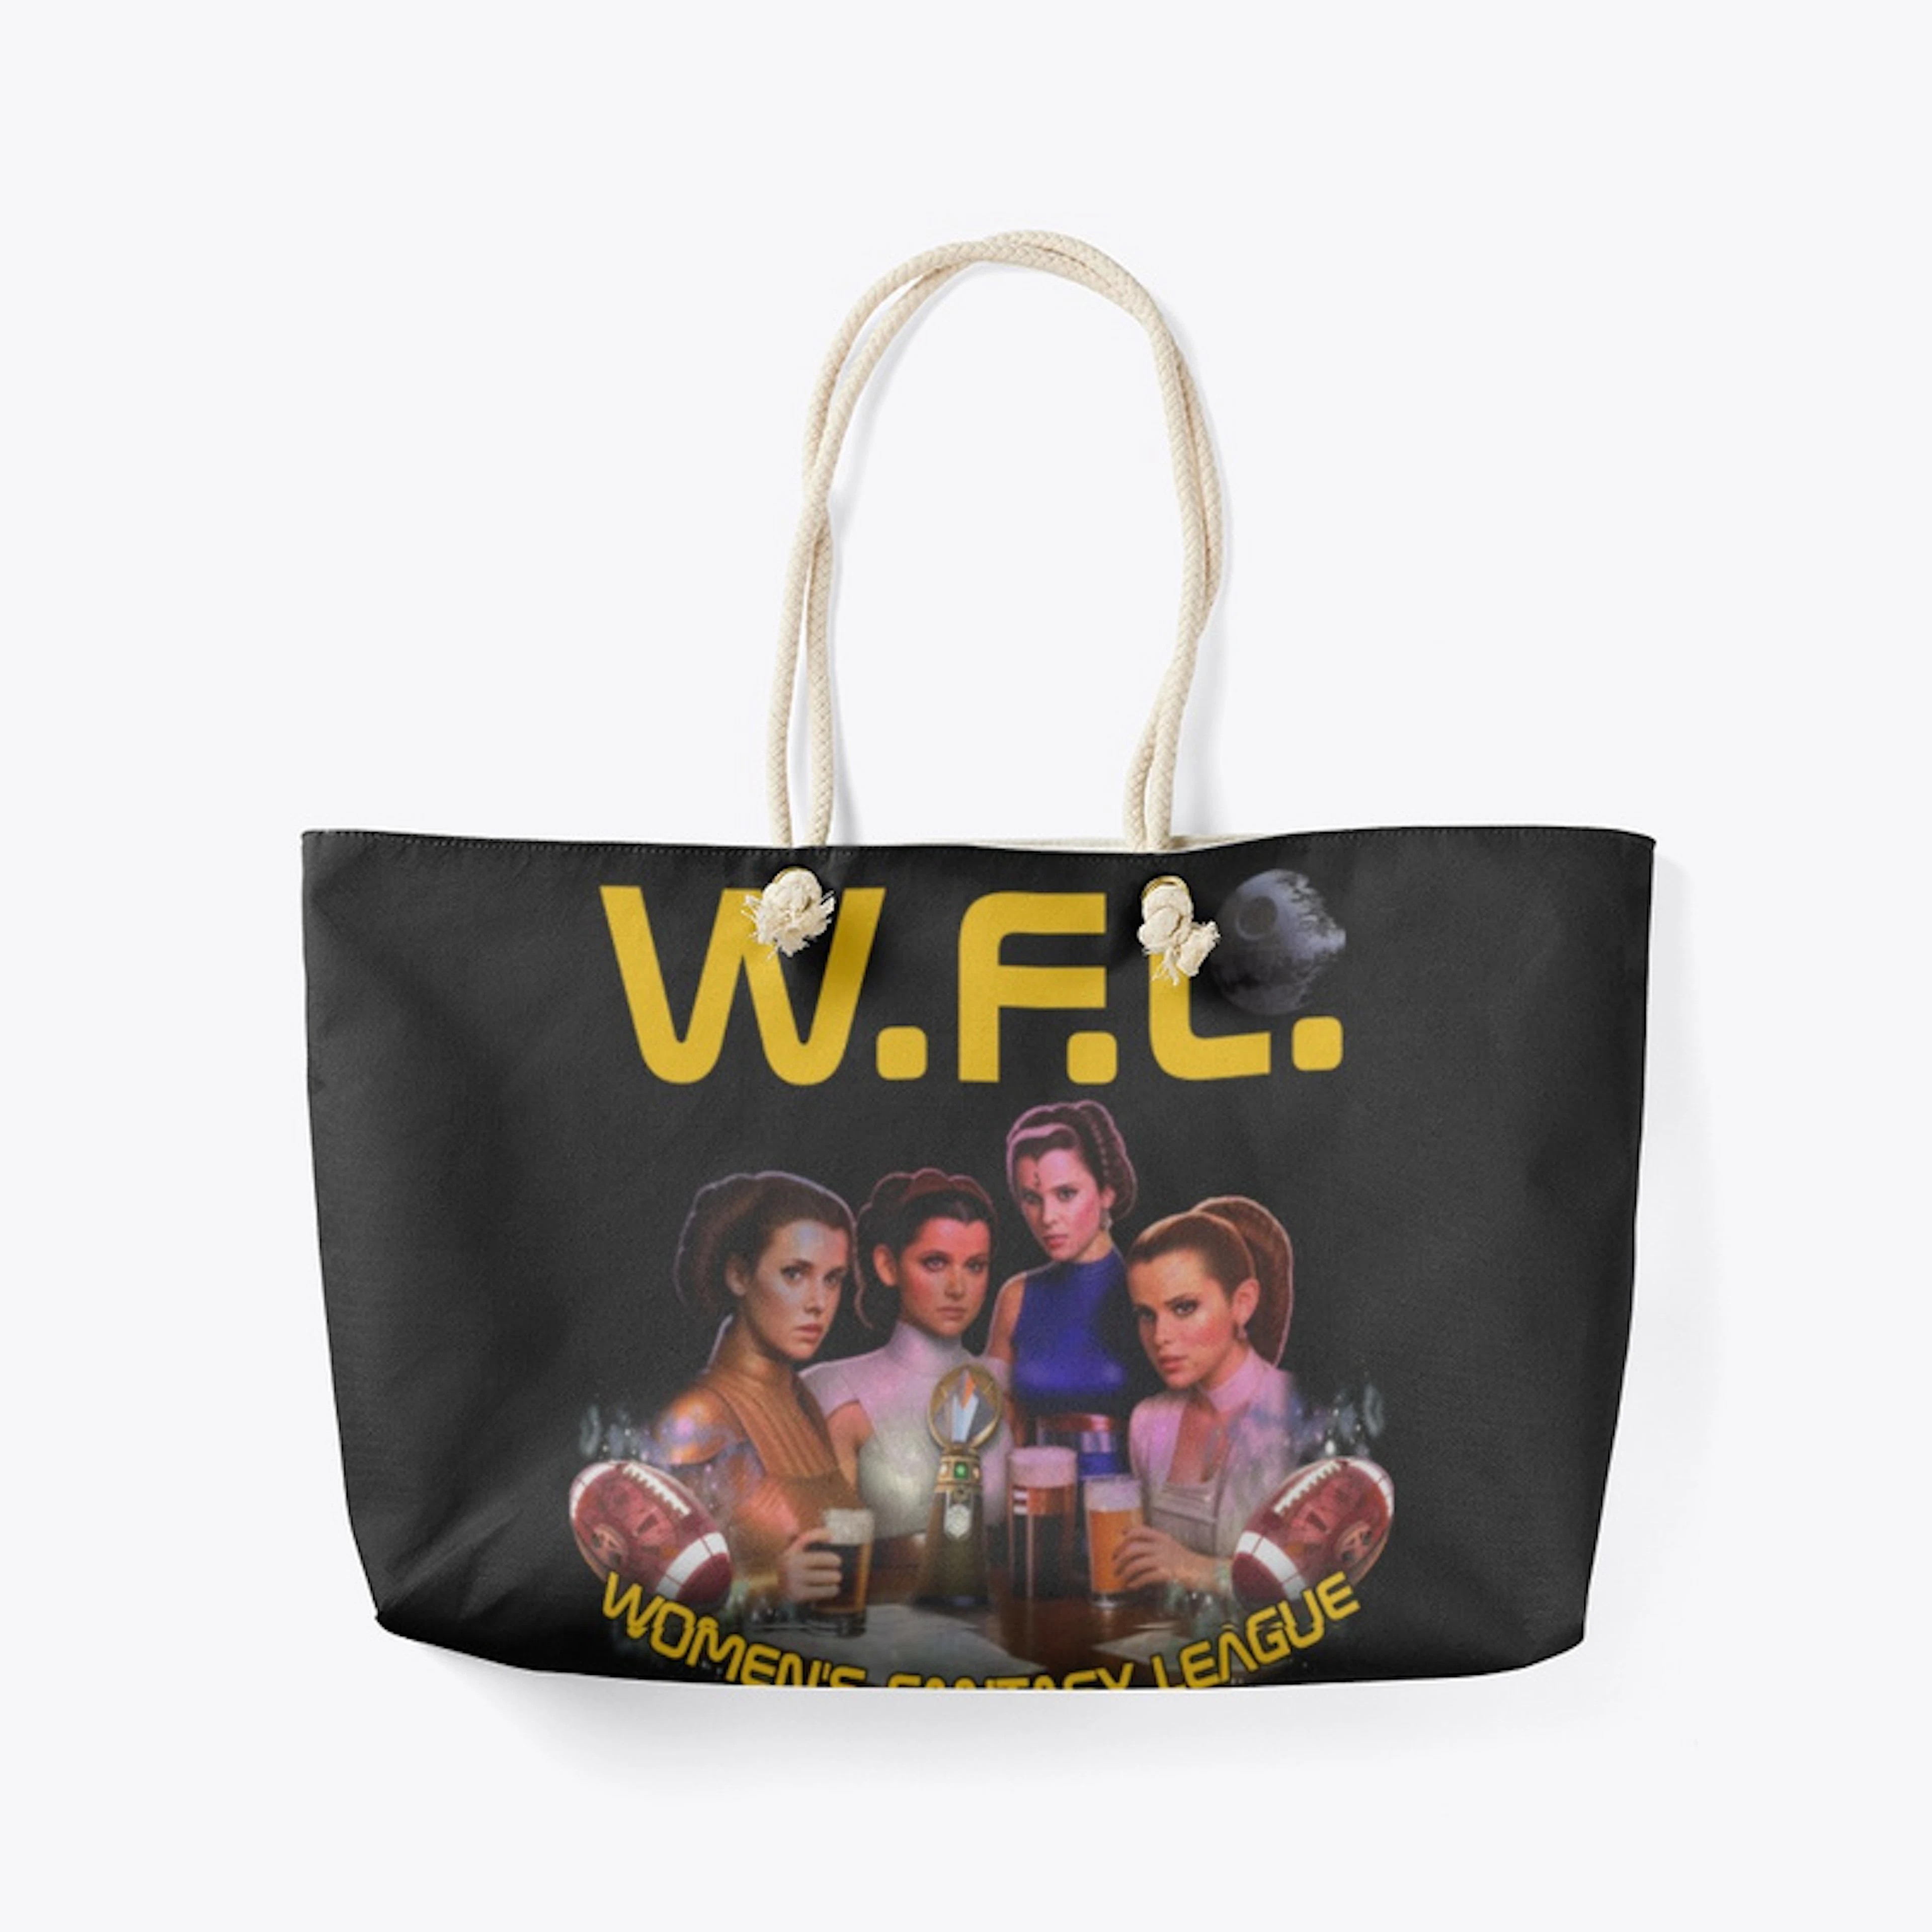 WFL - Women's Fantasy League